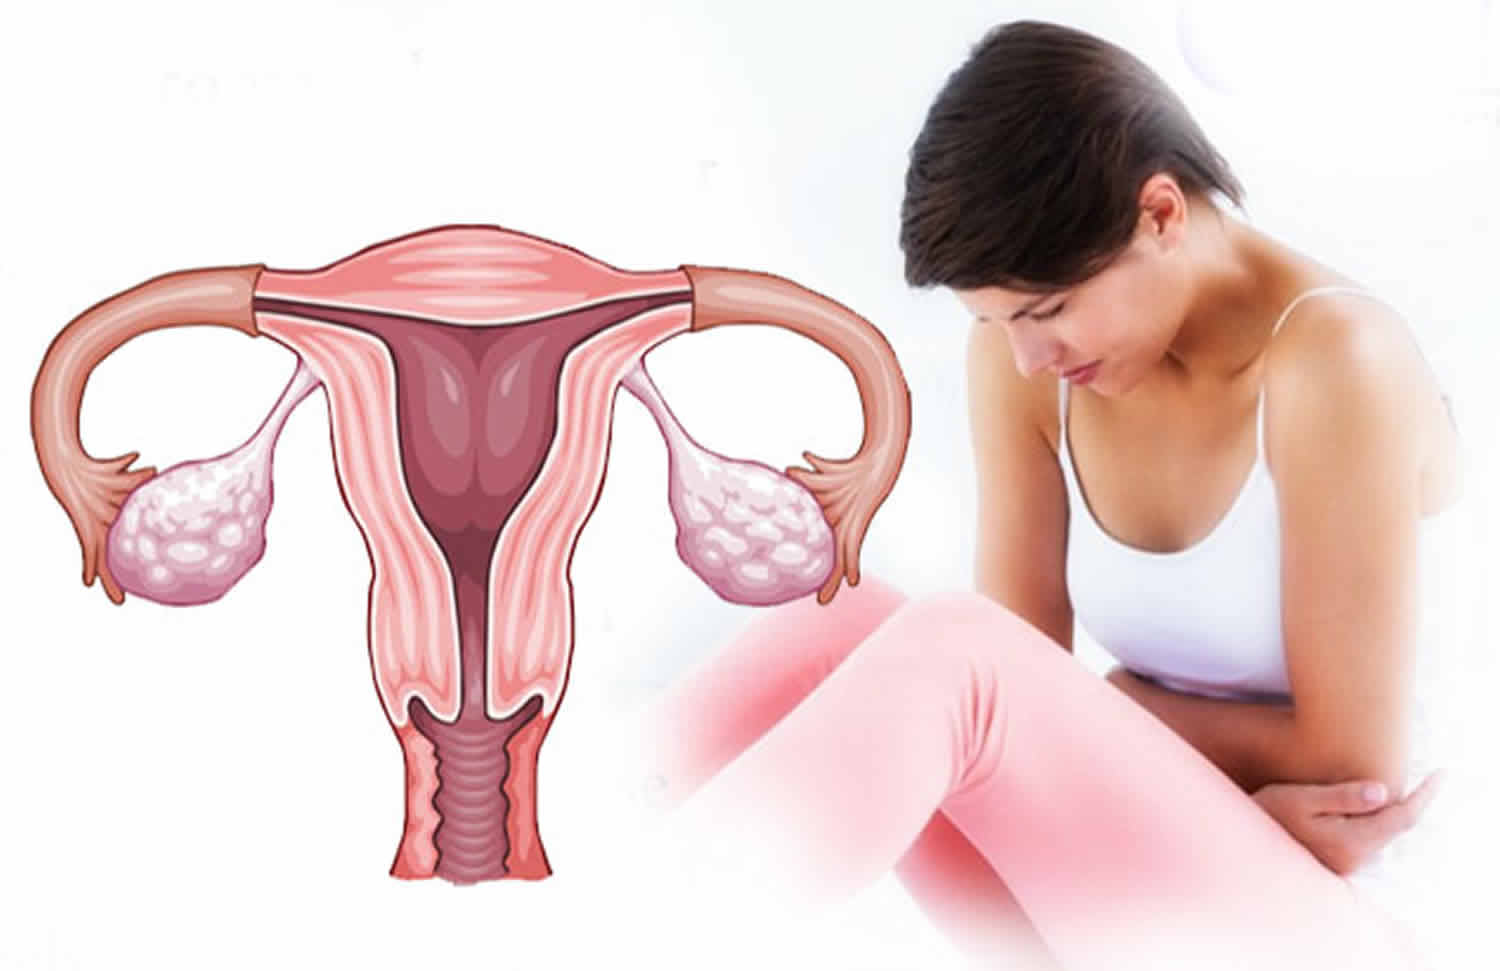 abnormal-uterine-bleeding-Cervix-Parents-Talks